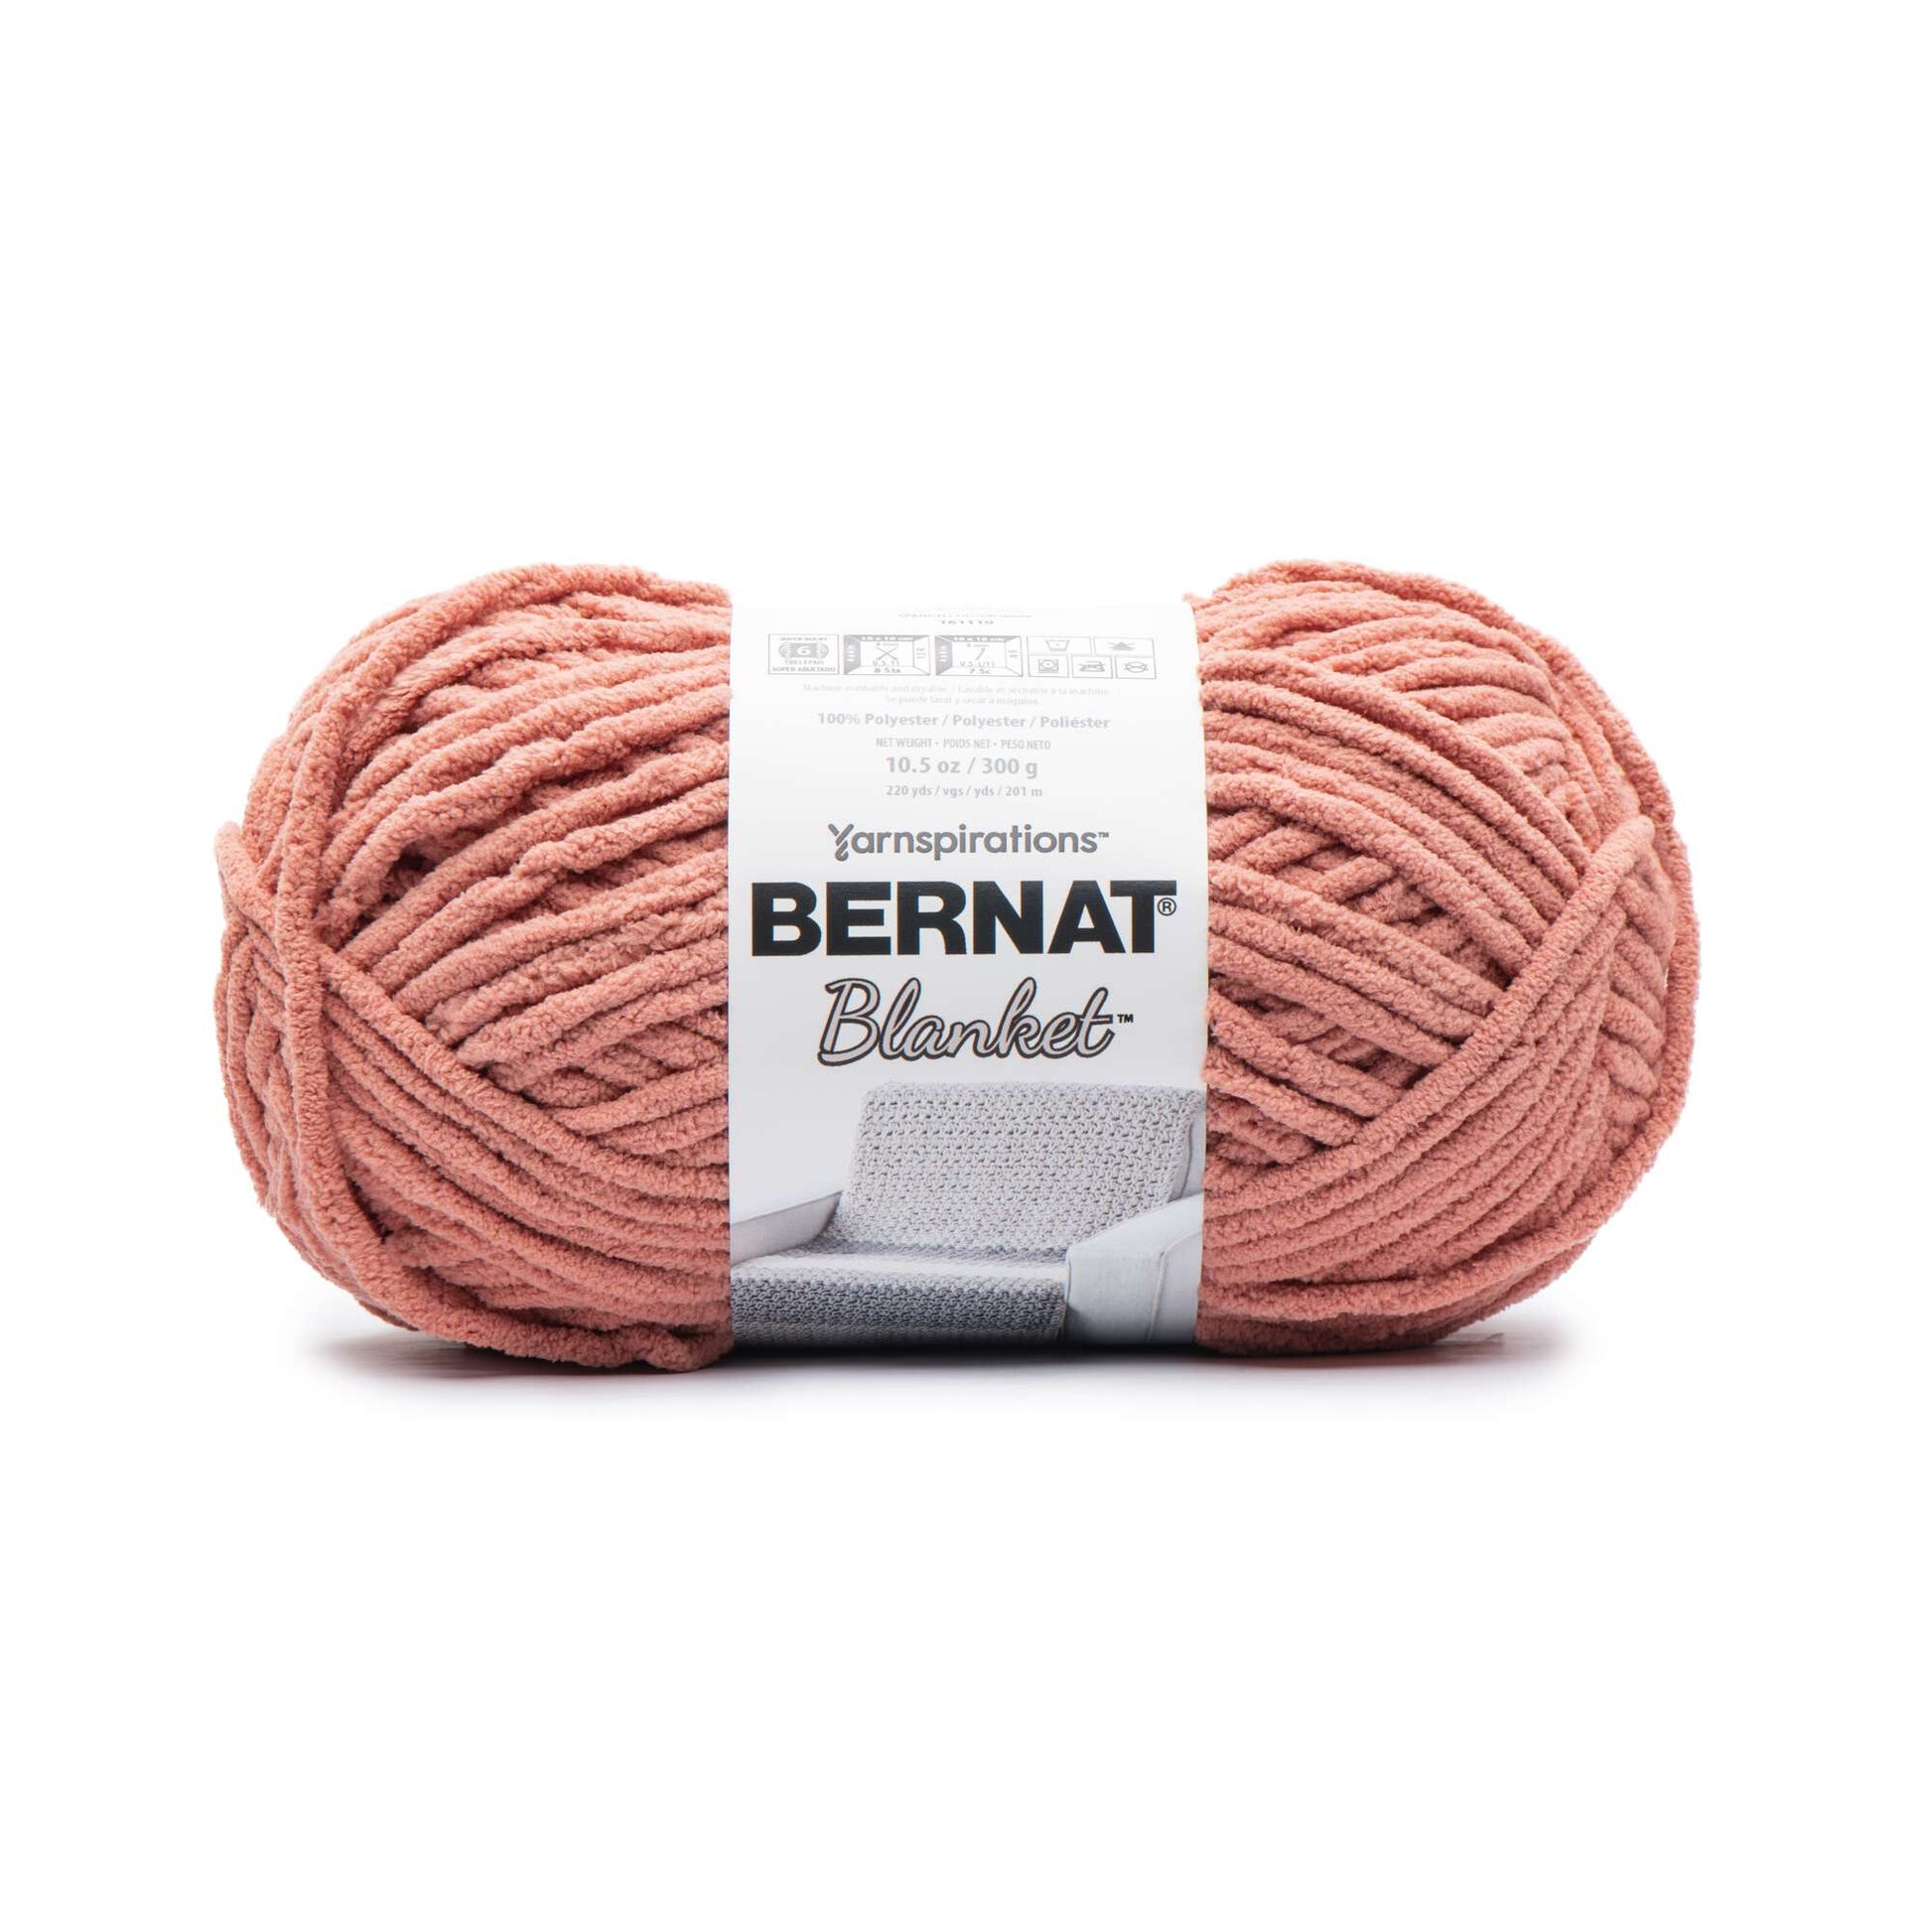 Bernat Blanket Yarn (300g/10.5oz) Terra Cotta